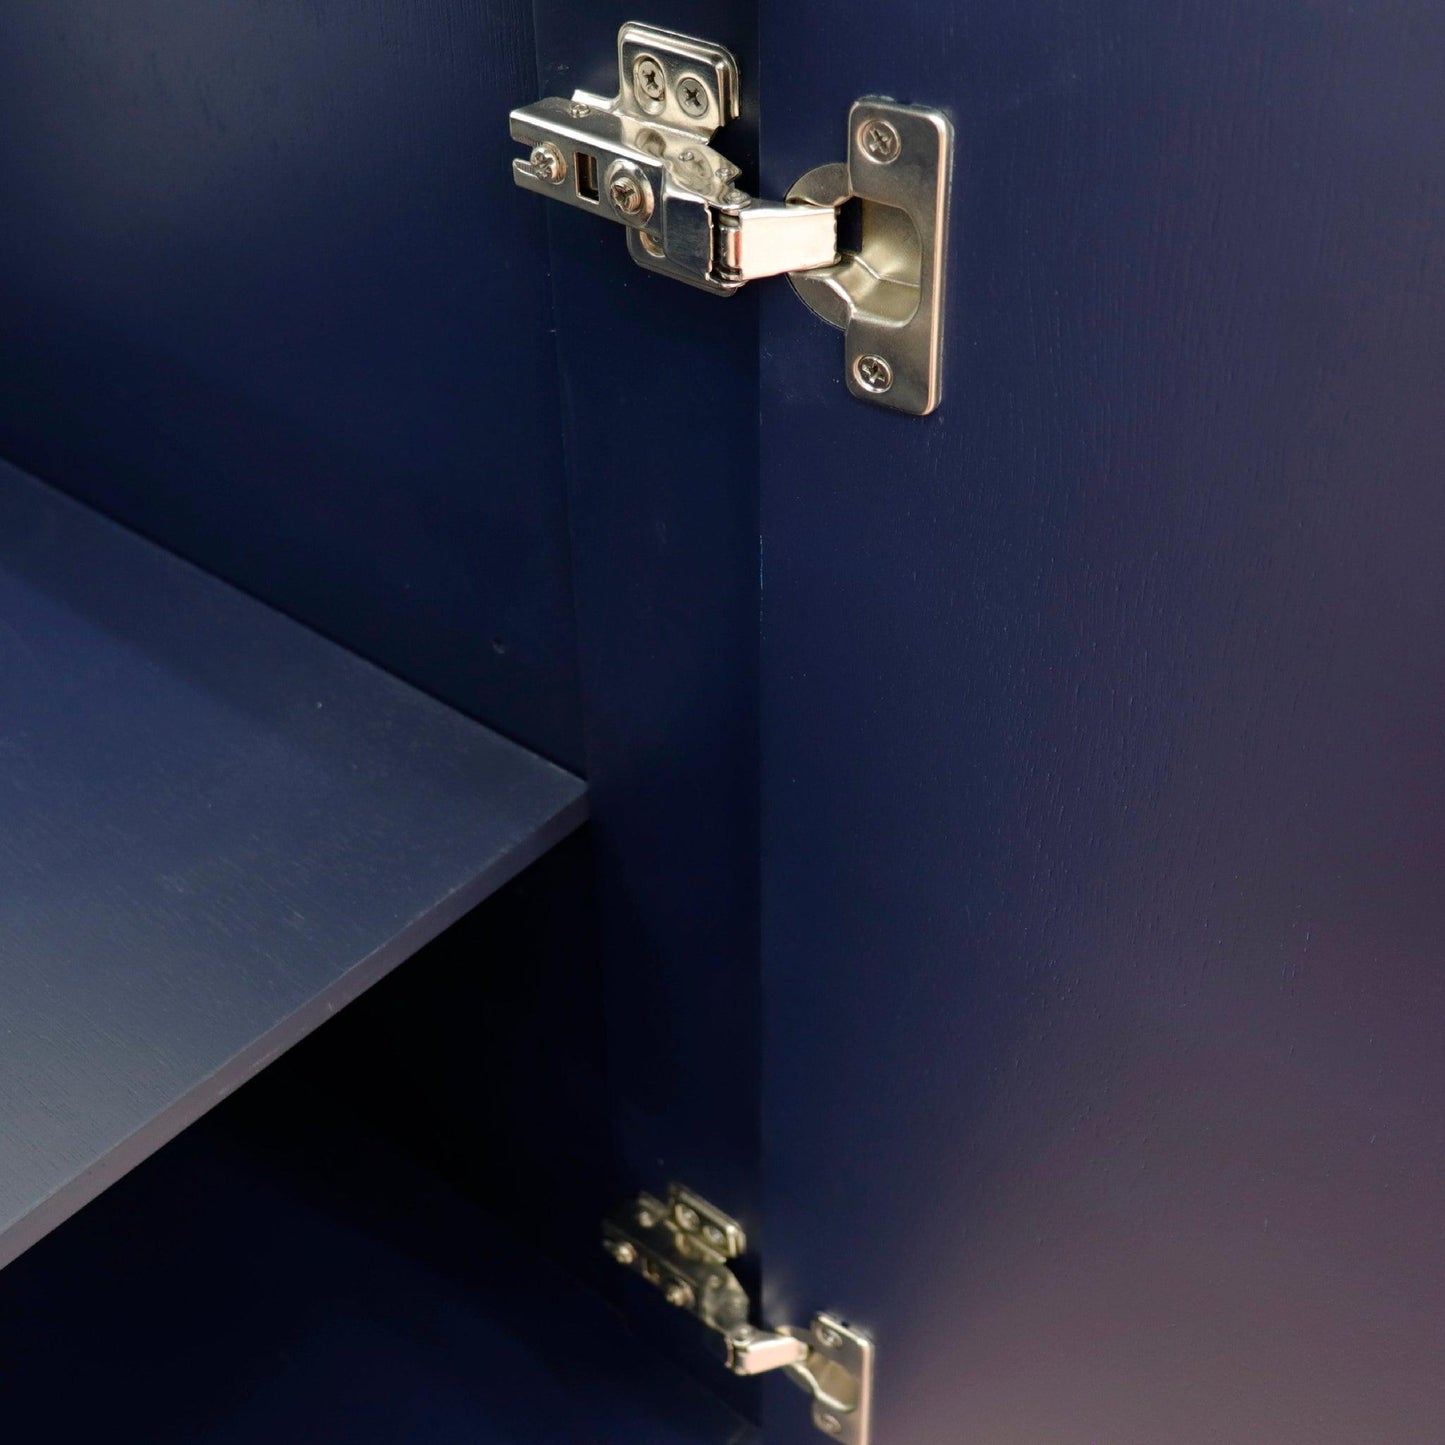 Bellaterra Home Terni 61" 2-Door 6-Drawer Blue Freestanding Vanity Set With Ceramic Undermount Rectangular Sink And Black Galaxy Granite Top